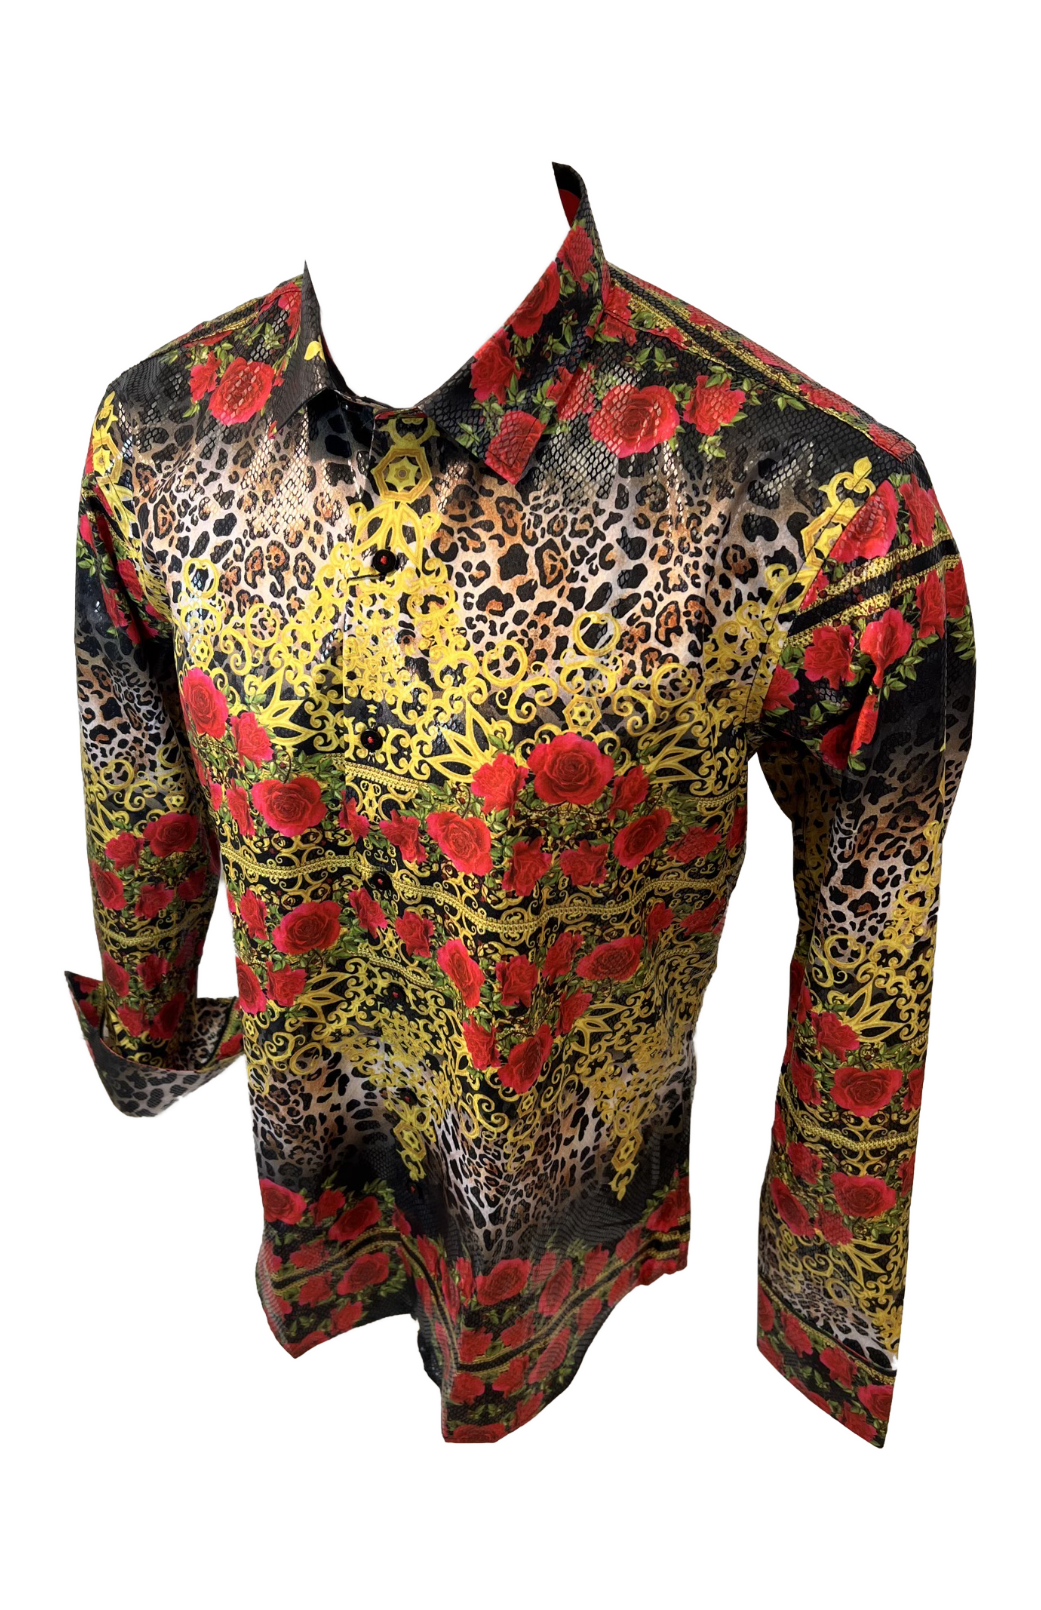 Men's Long Sleeve Button Down Dress Shirt Black Red Gold Floral Rose Garden Leopard Geometric